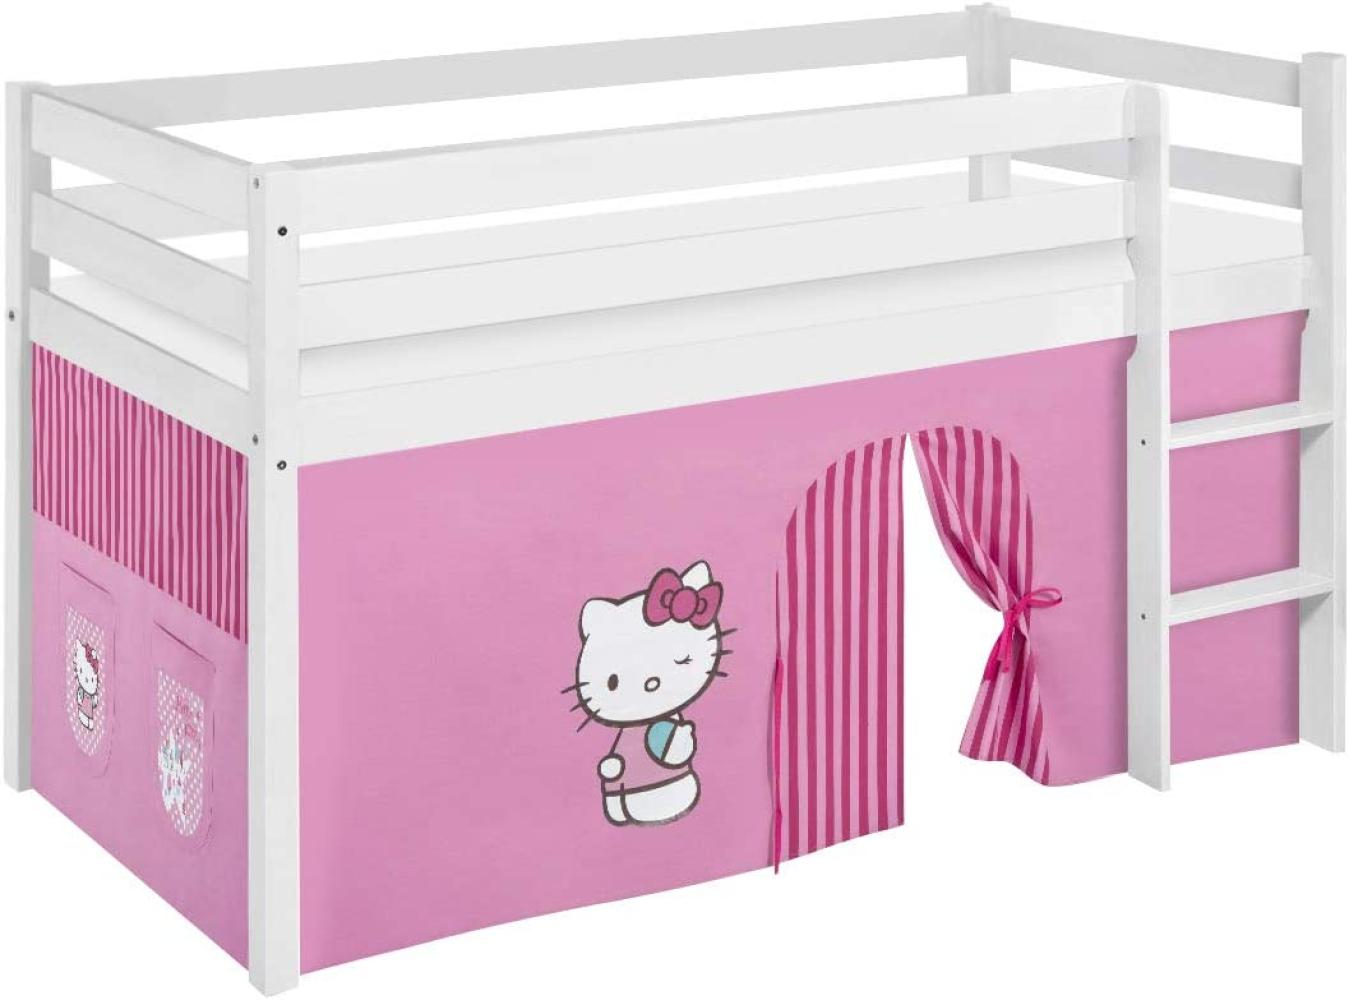 Lilokids 'Jelle' Spielbett 90 x 200 cm, Hello Kitty Rosa, Kiefer massiv, mit Vorhang Bild 1